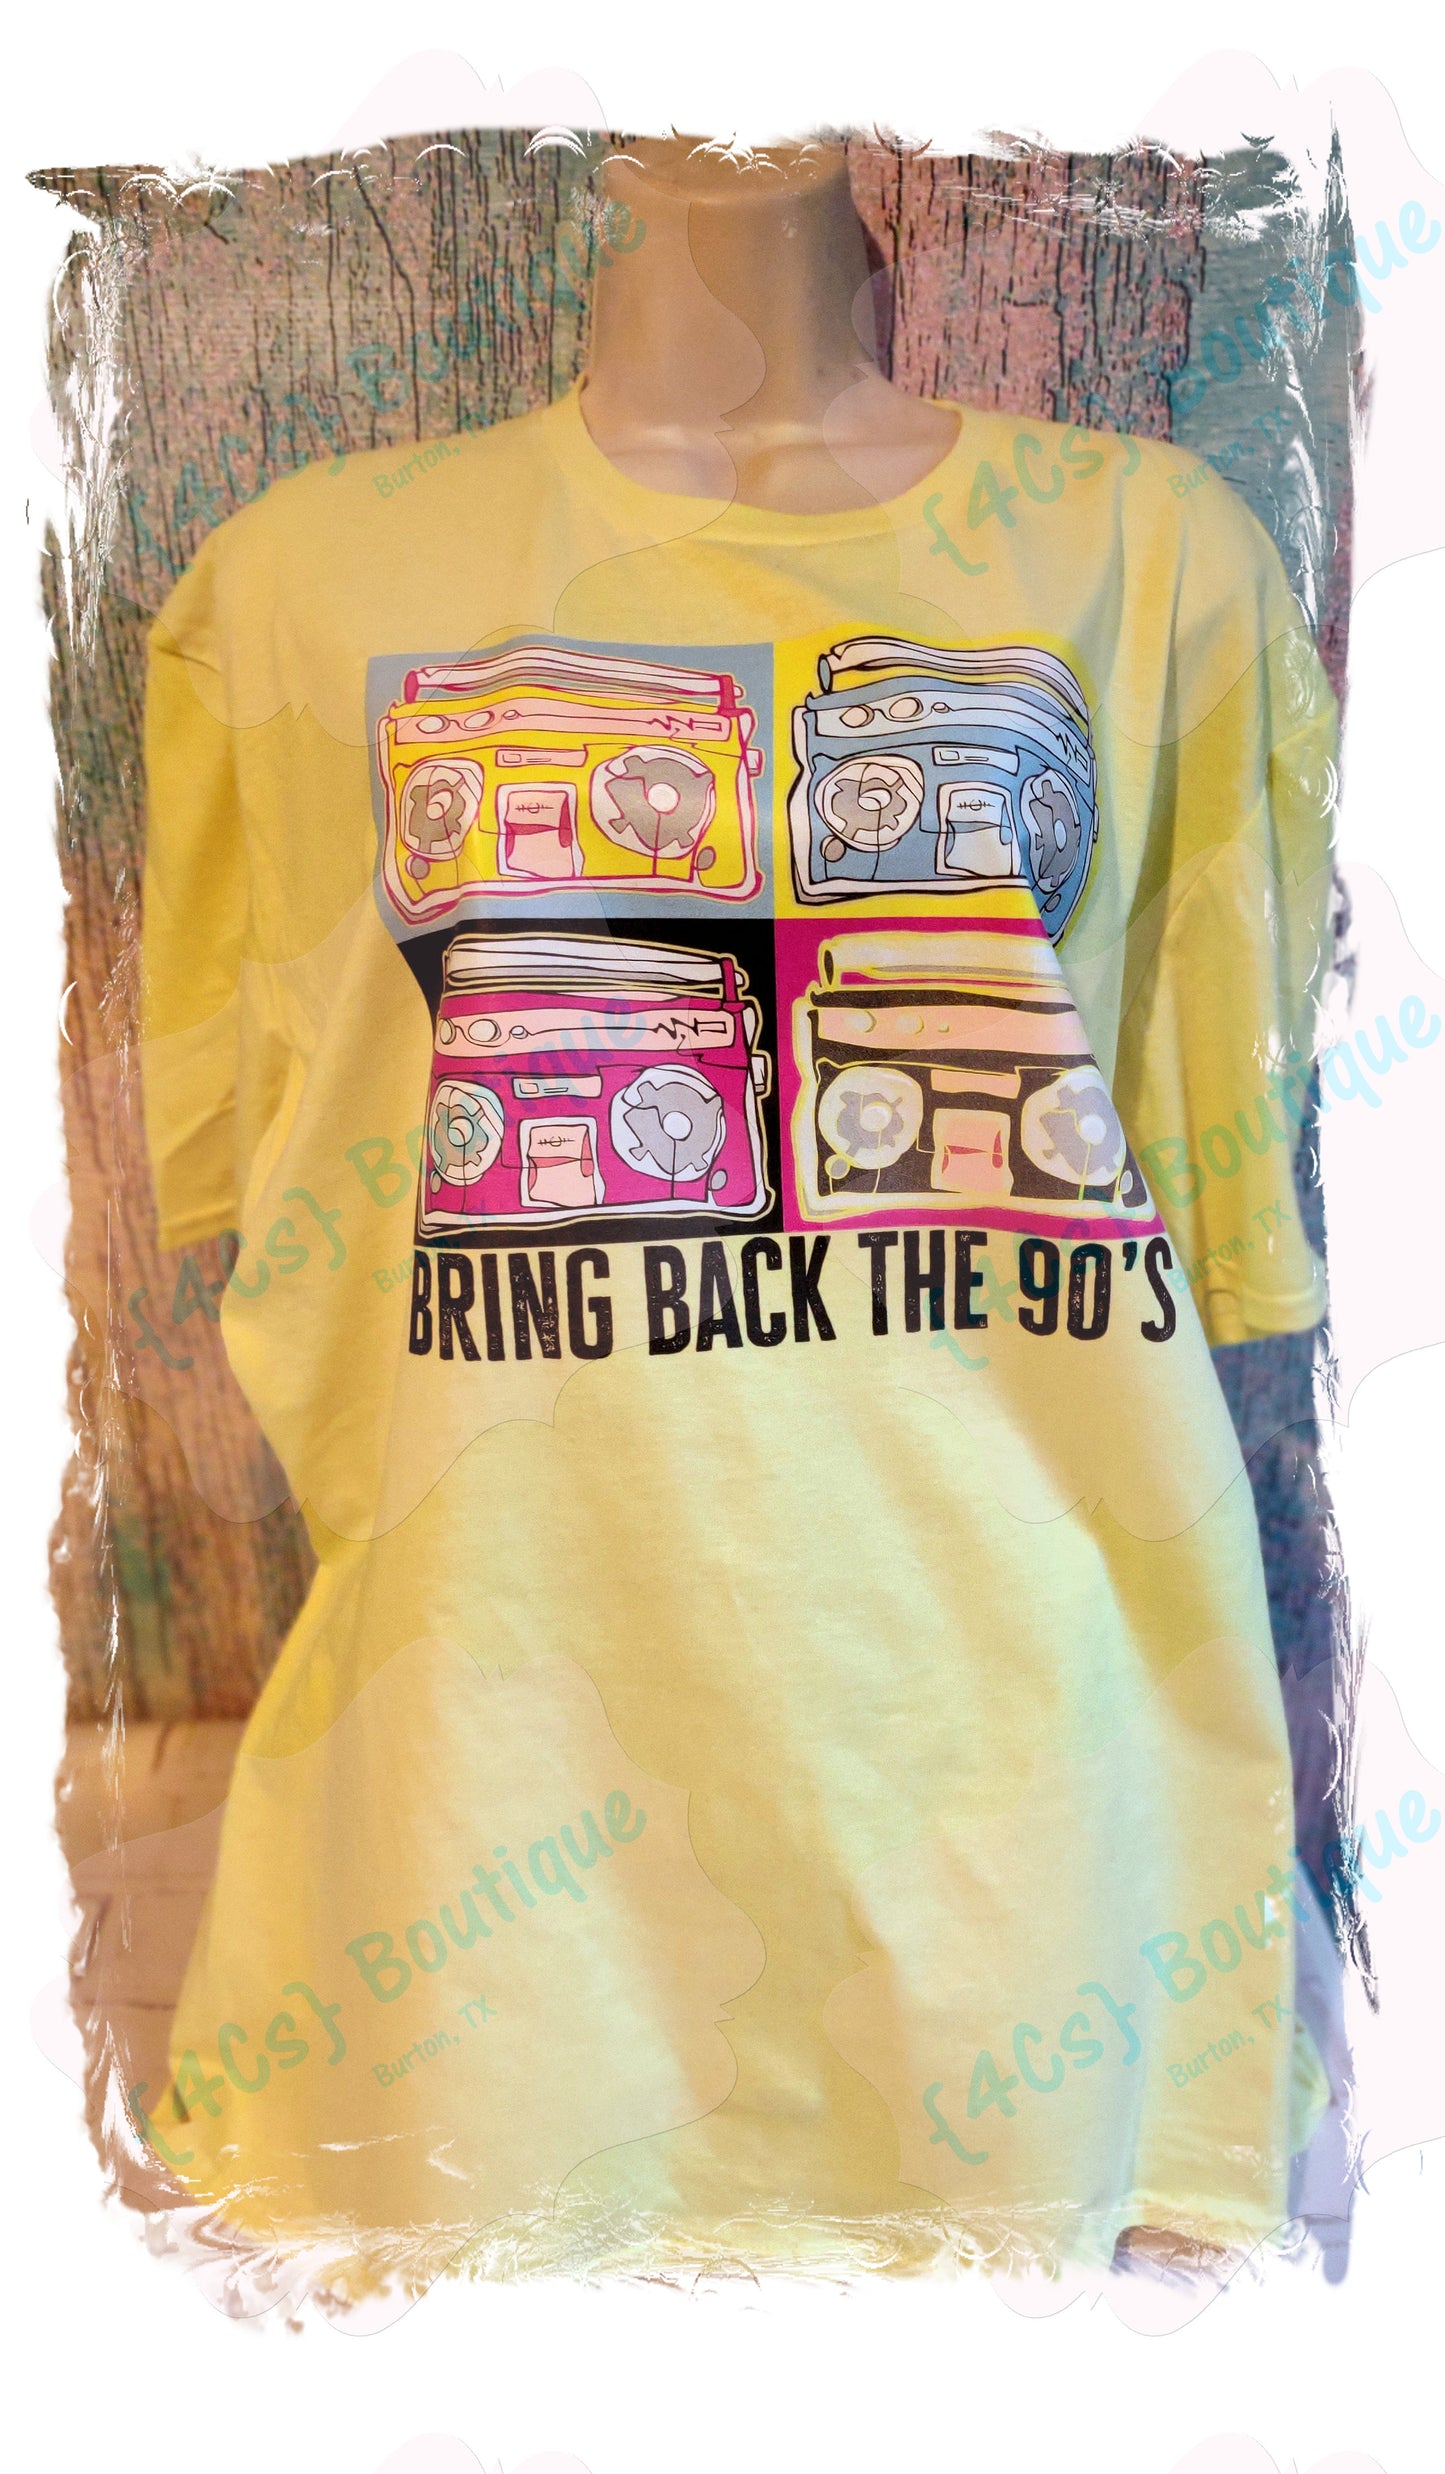 Bring Back The 90s Shirt